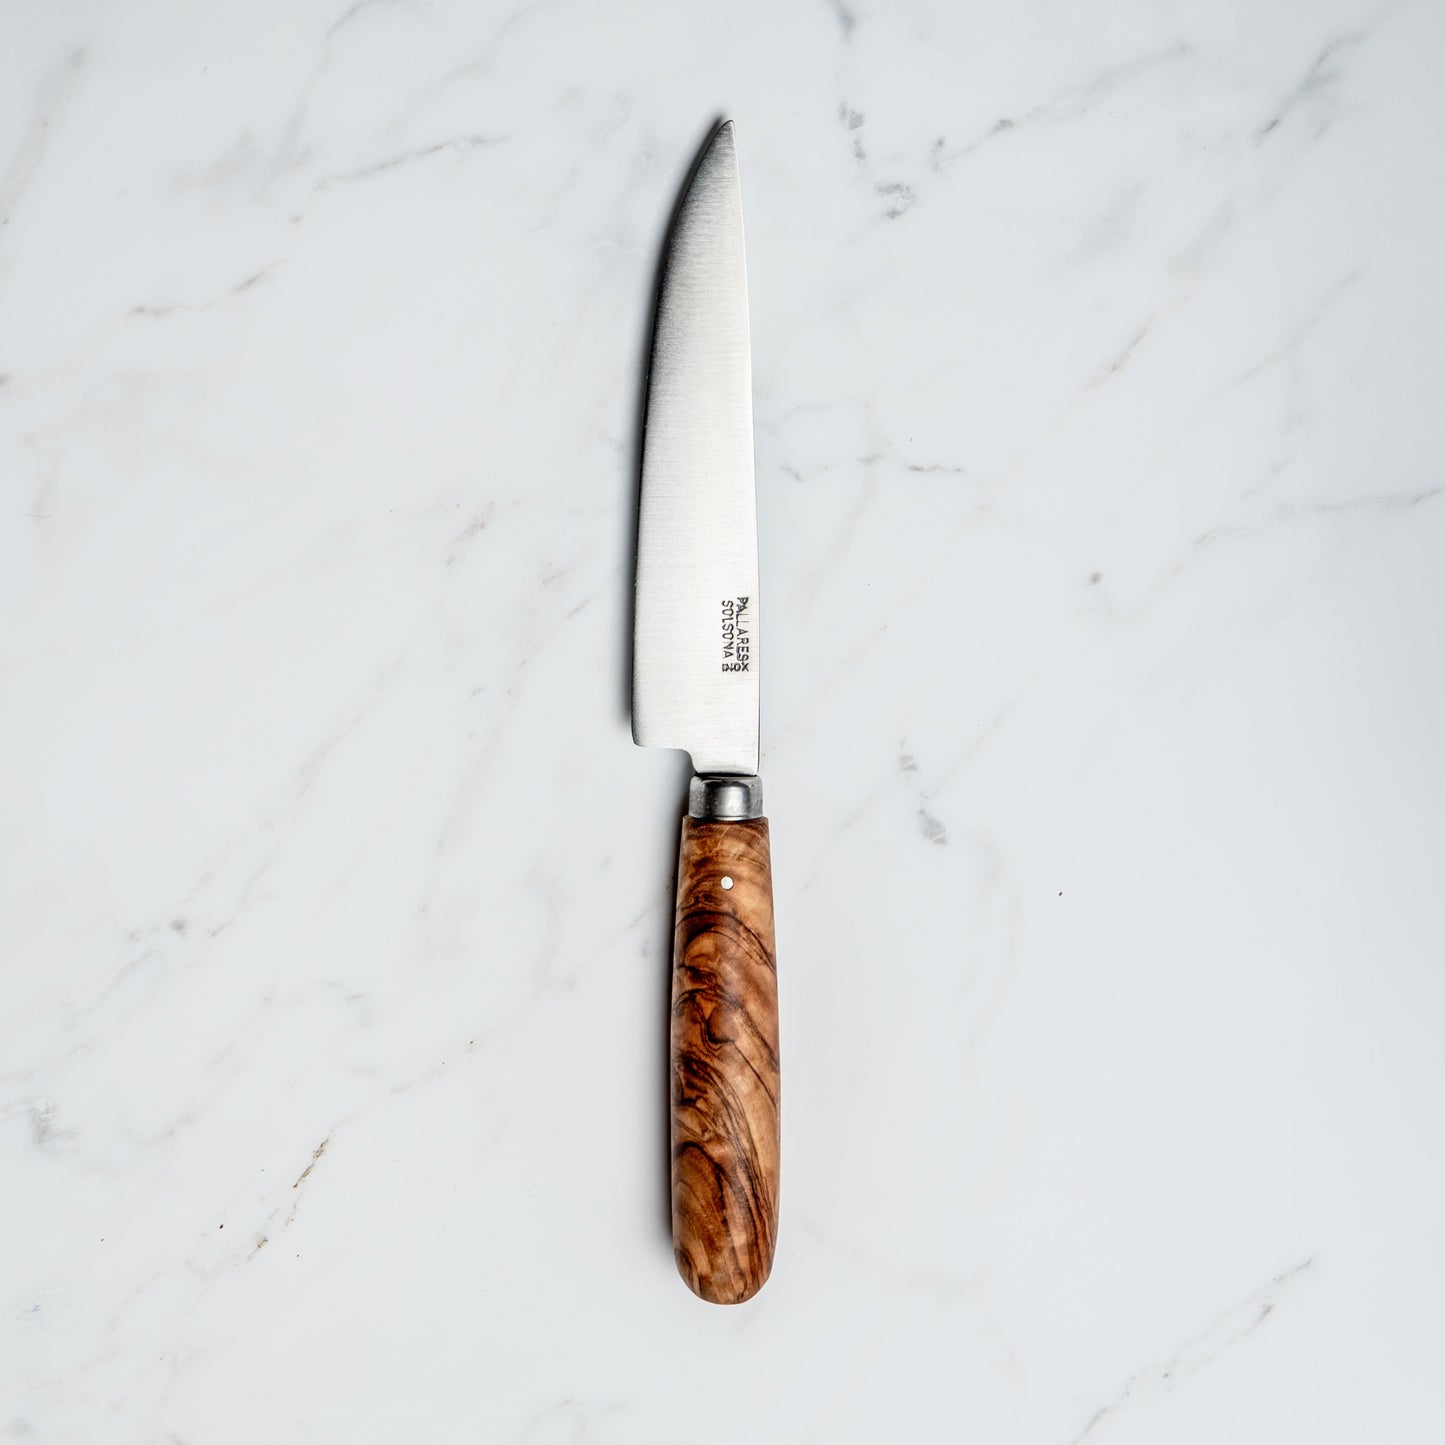 OLIVE WOOD STEAK KNIFE S.S